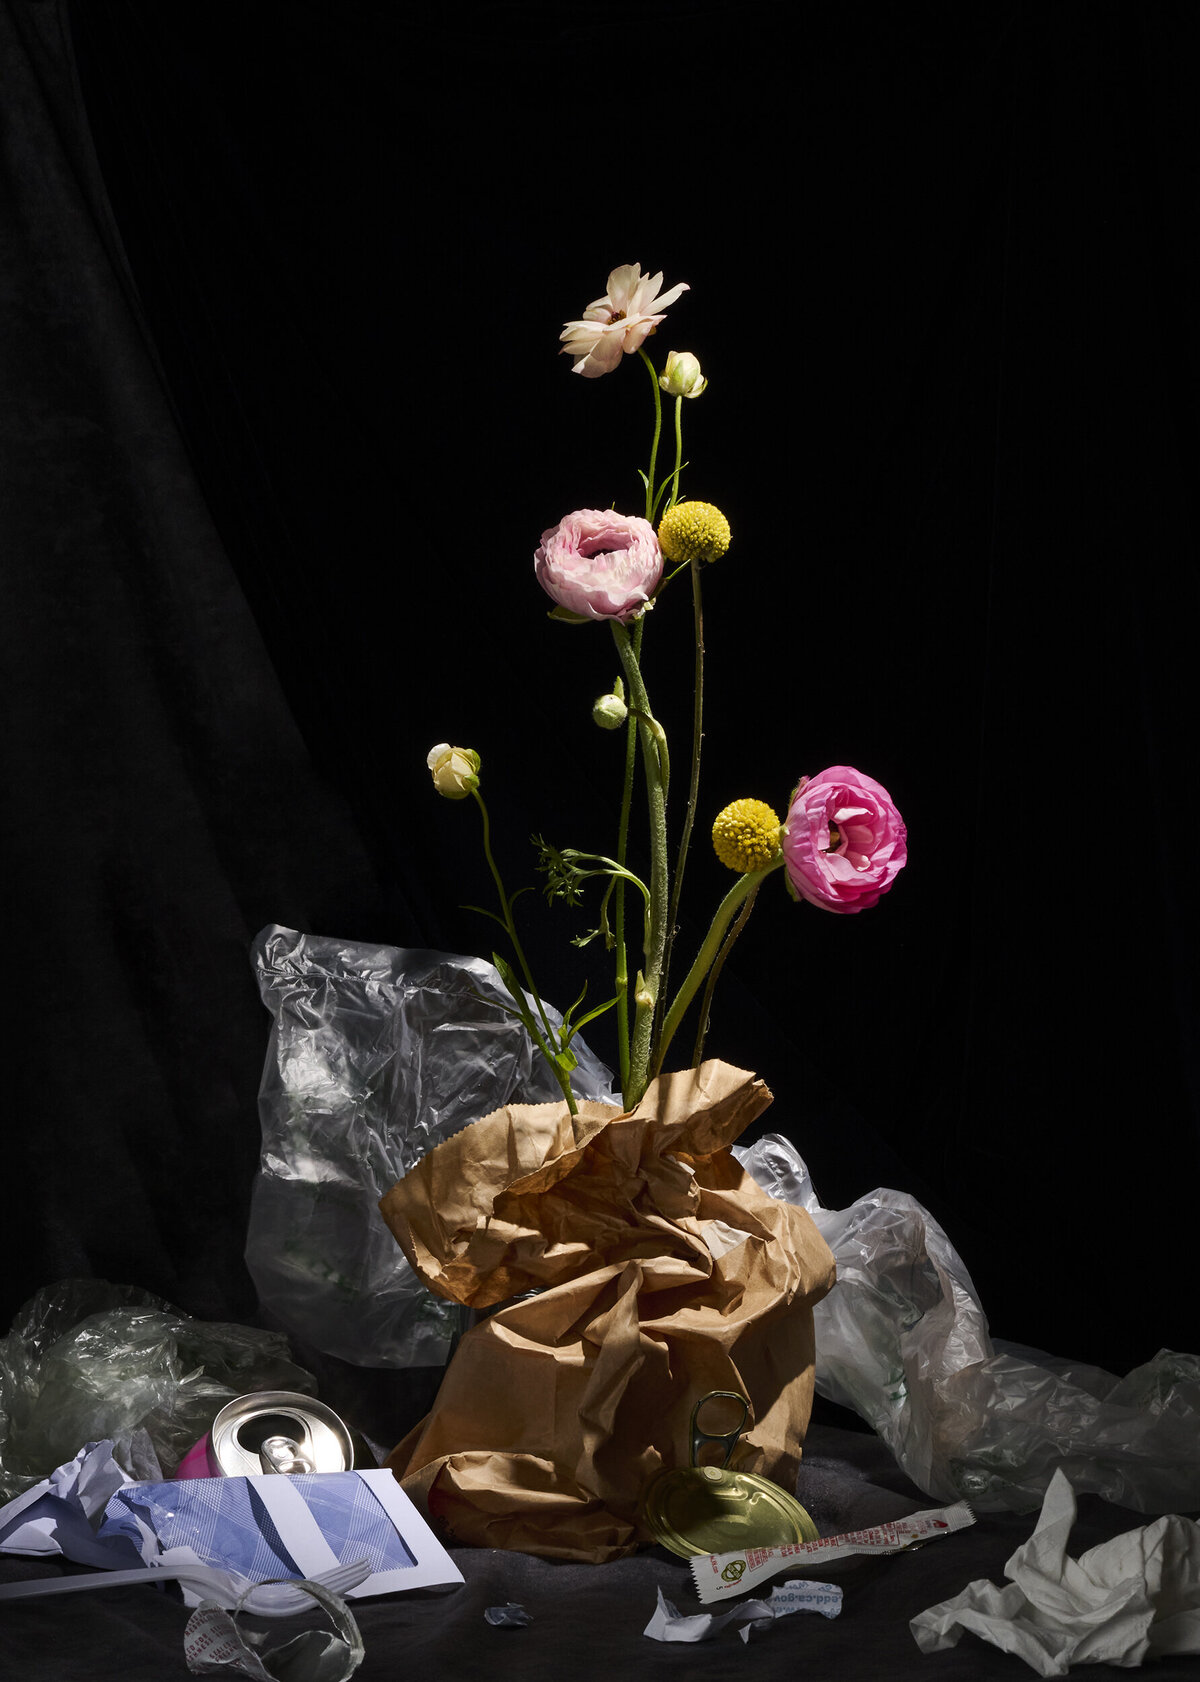 los-angeles-product-photographer-lindsay-kreighbaum-florals-mushrooms-still-life-2